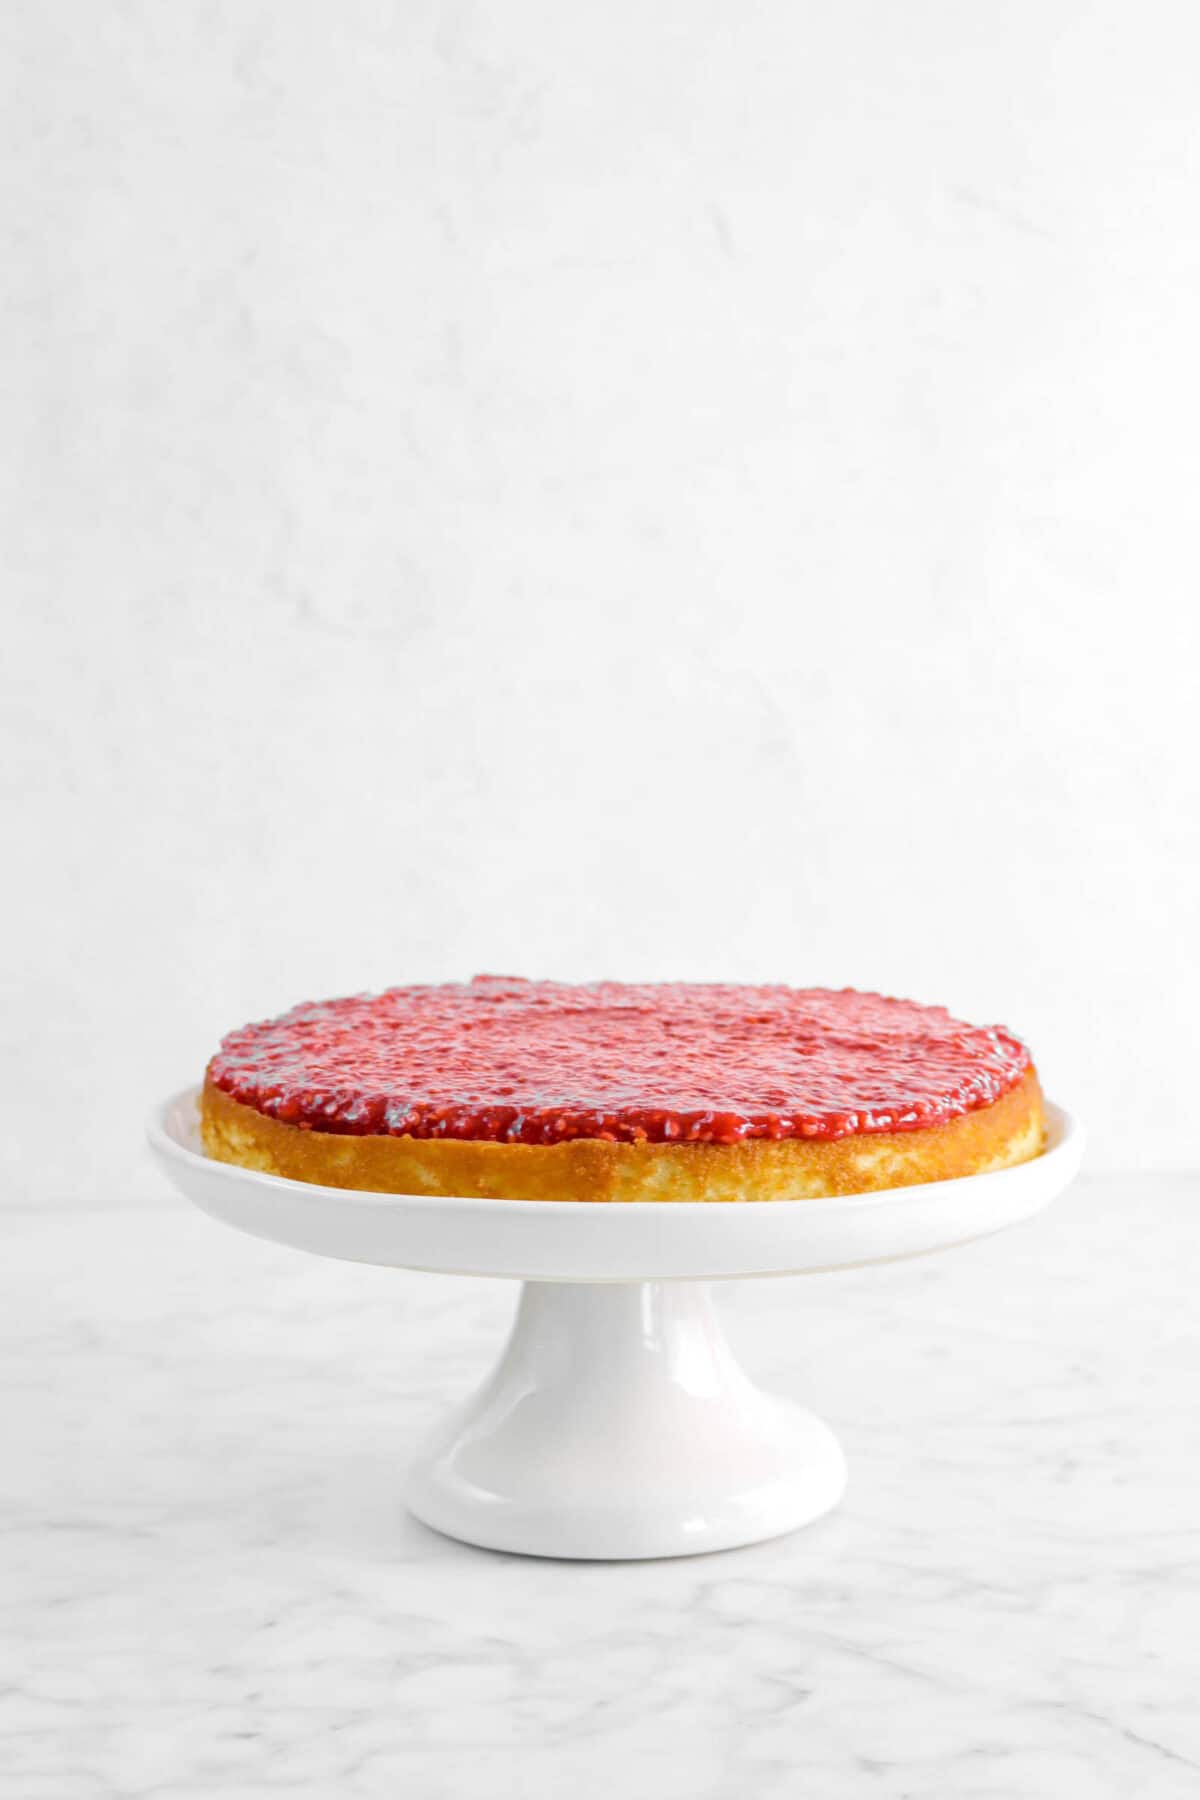 raspberry jam spread across cake layer